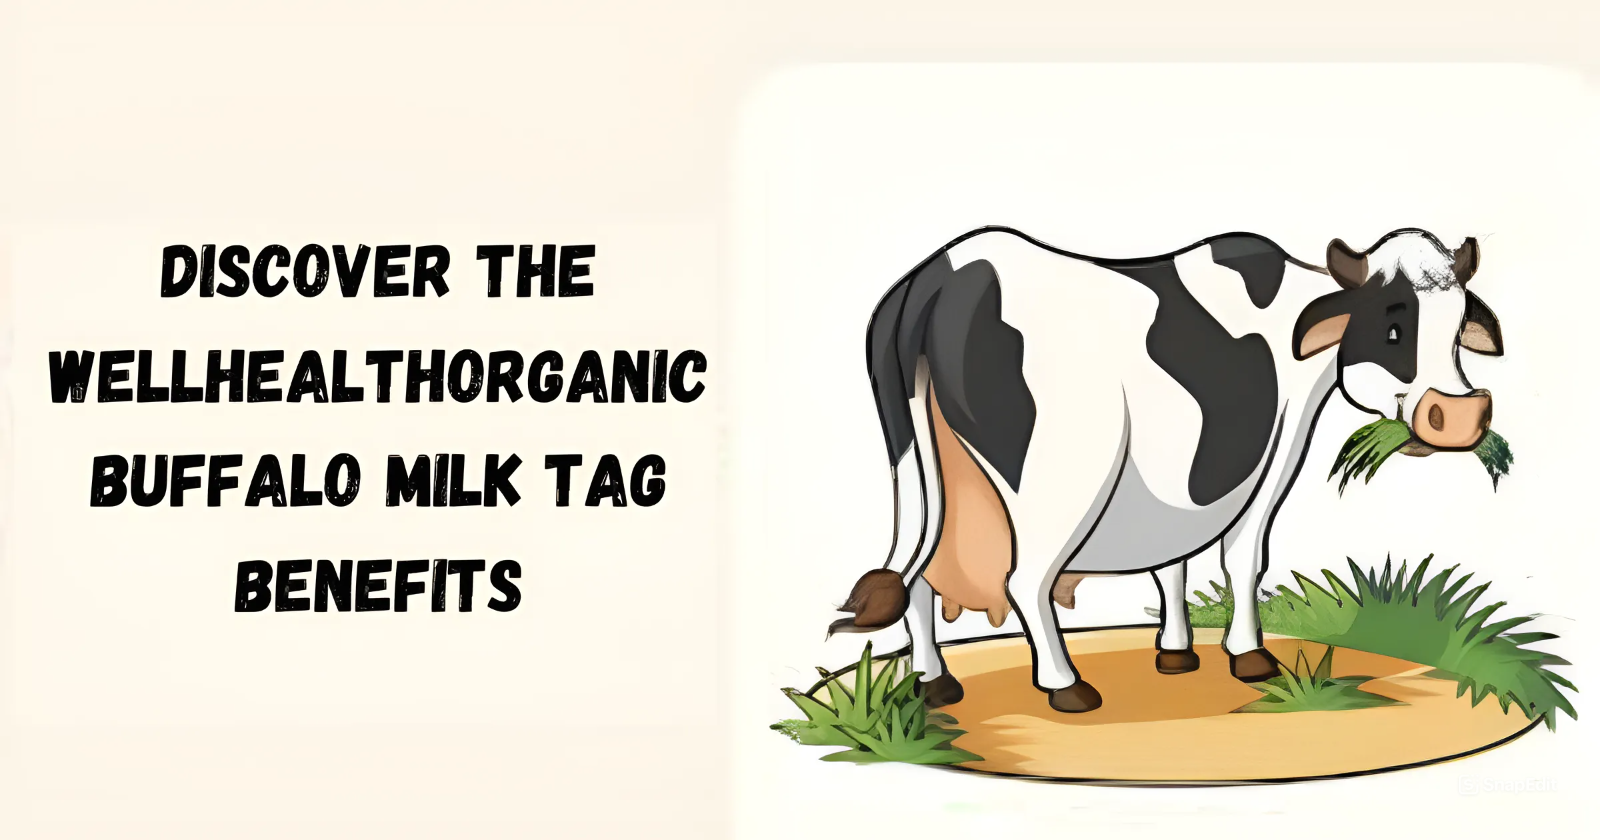 Wellhealthorganic Buffalo Milk Tag benefits